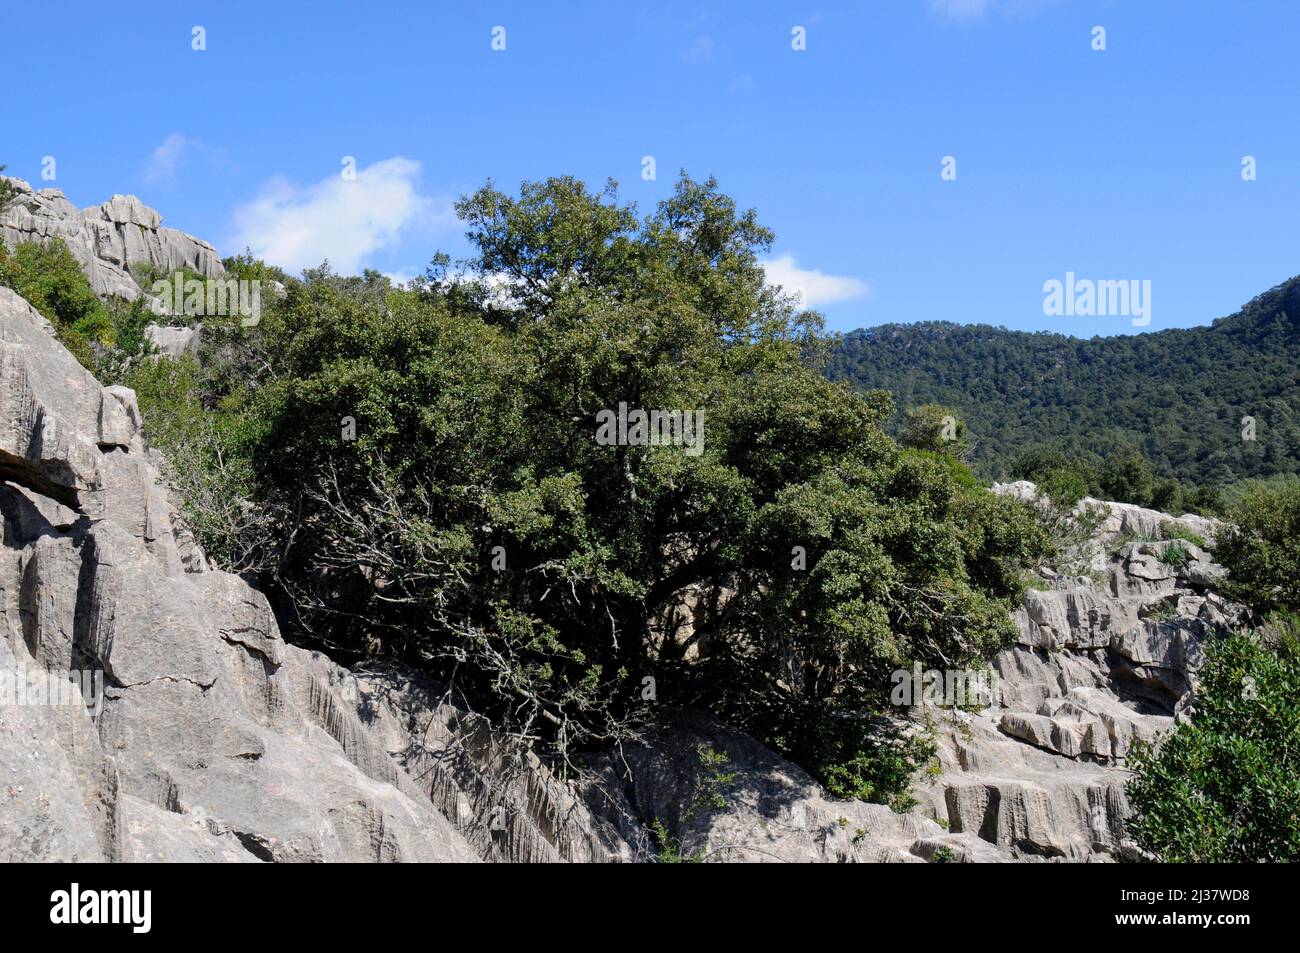 Evergreen oak (Quercus ilex ilex) is an evergreen tree native to southern Europe. This photo was taken in Mallorca, Balearic Islands, Spain. Stock Photo